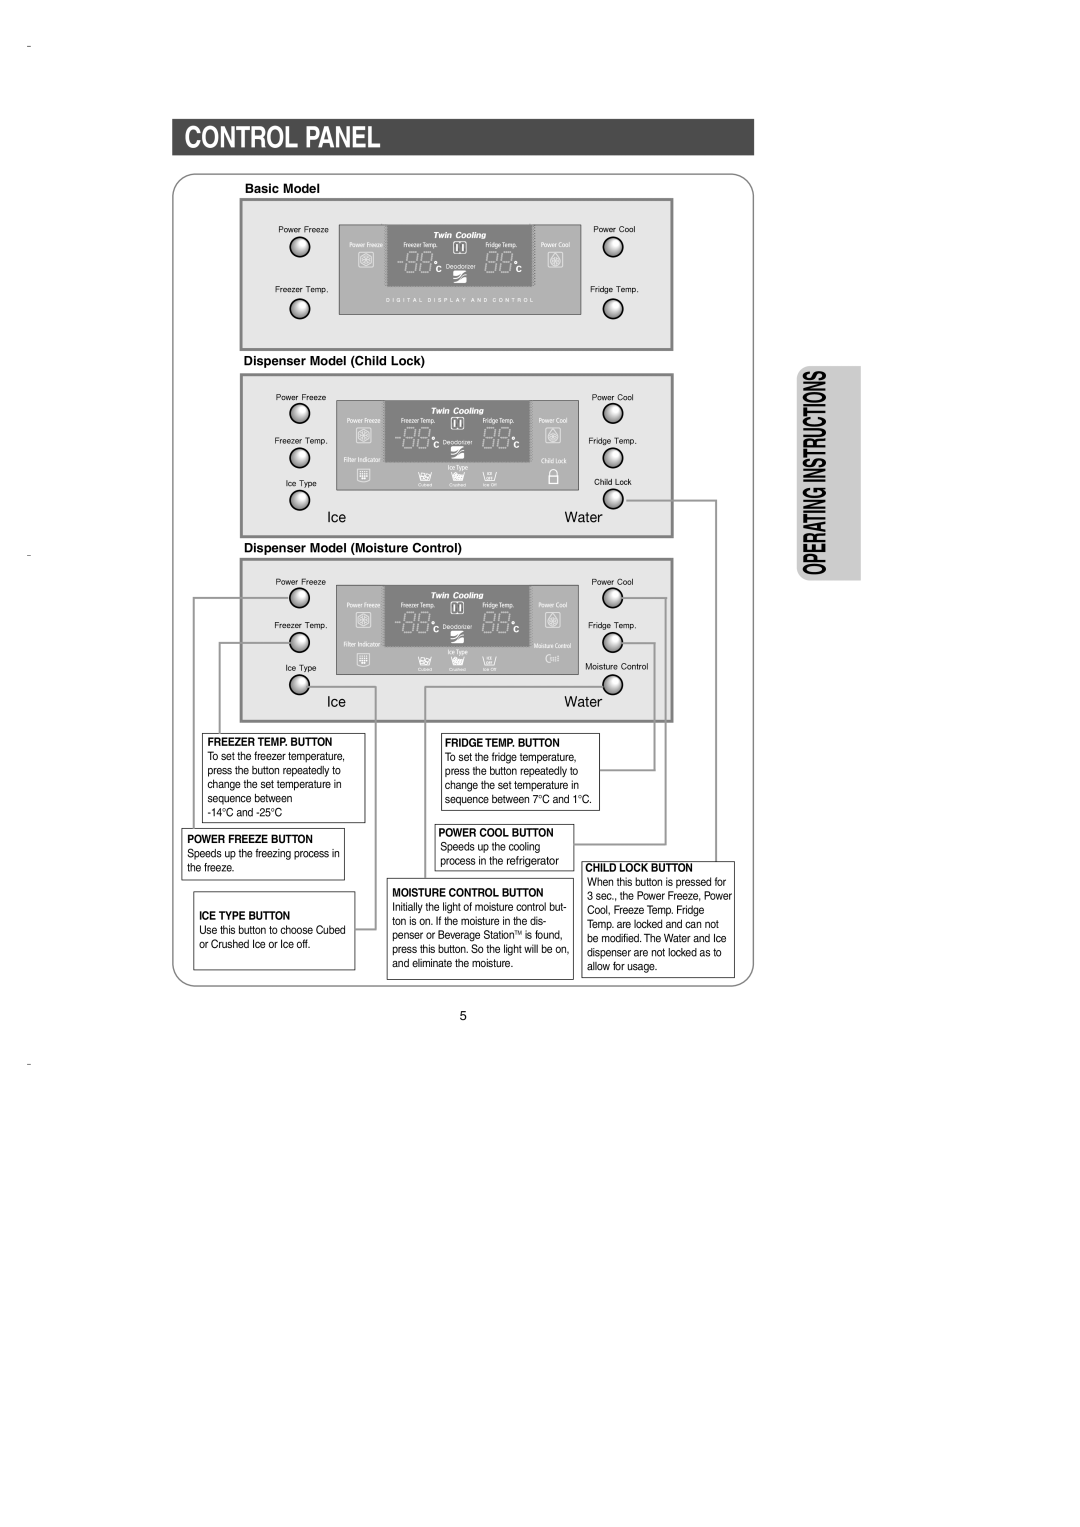 Samsung DA99-00275B owner manual Control Panel, Operating Instructions, Basic Model Dispenser Model Child Lock 